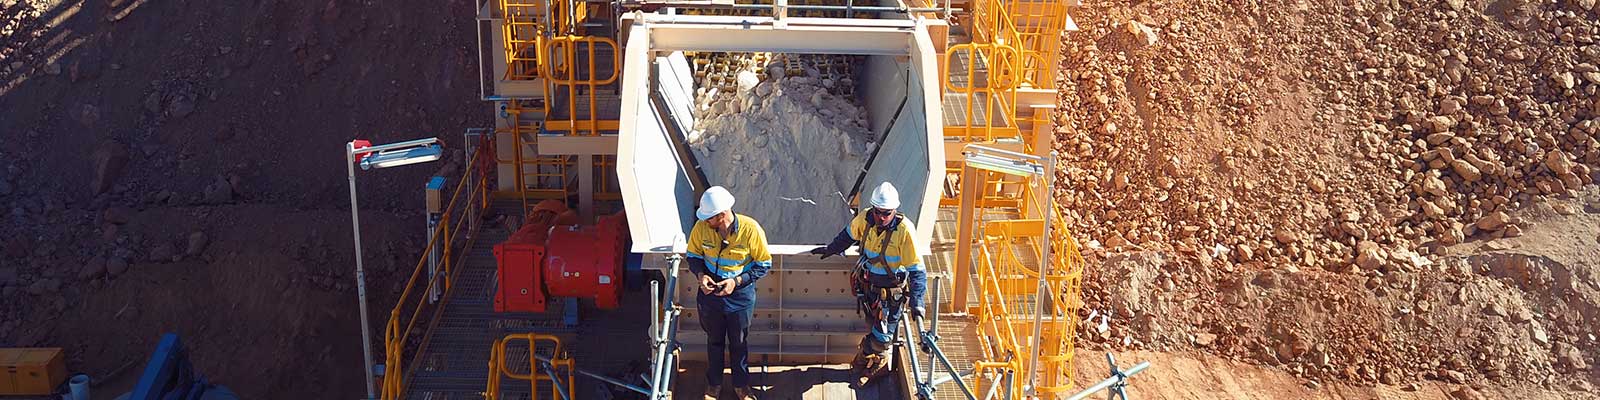 Dalgaranga Gold Project, Murchison Region Western Australia